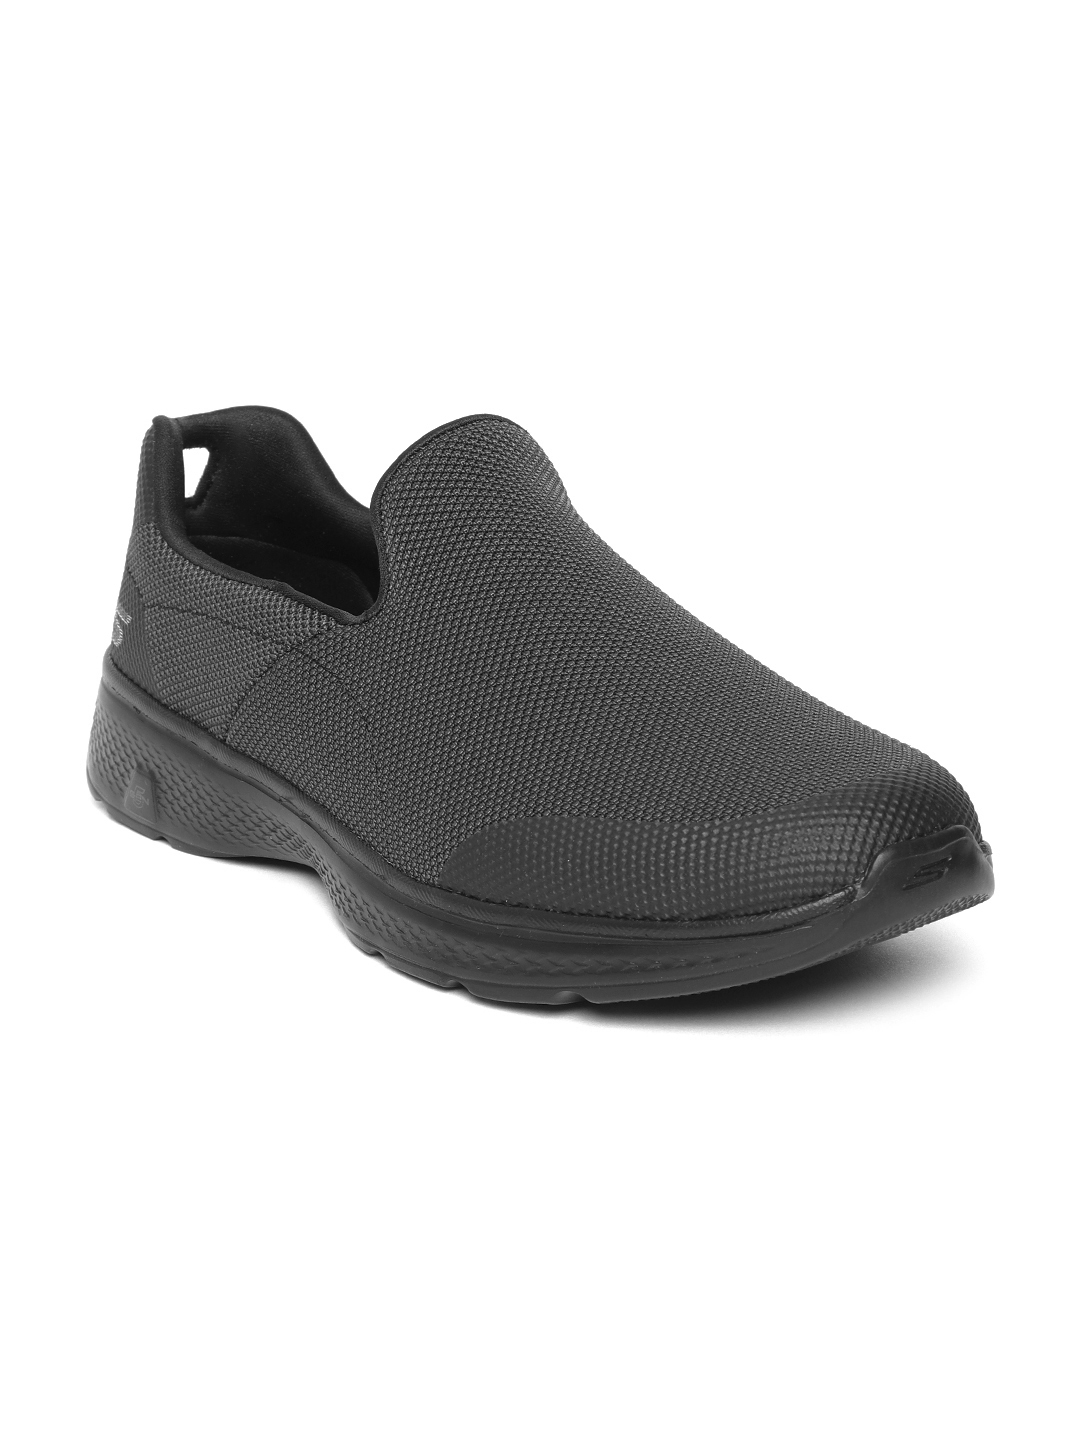 Buy Men Black Go Walk Viability Walking Shoes Shoes for Men 8885655 | Myntra